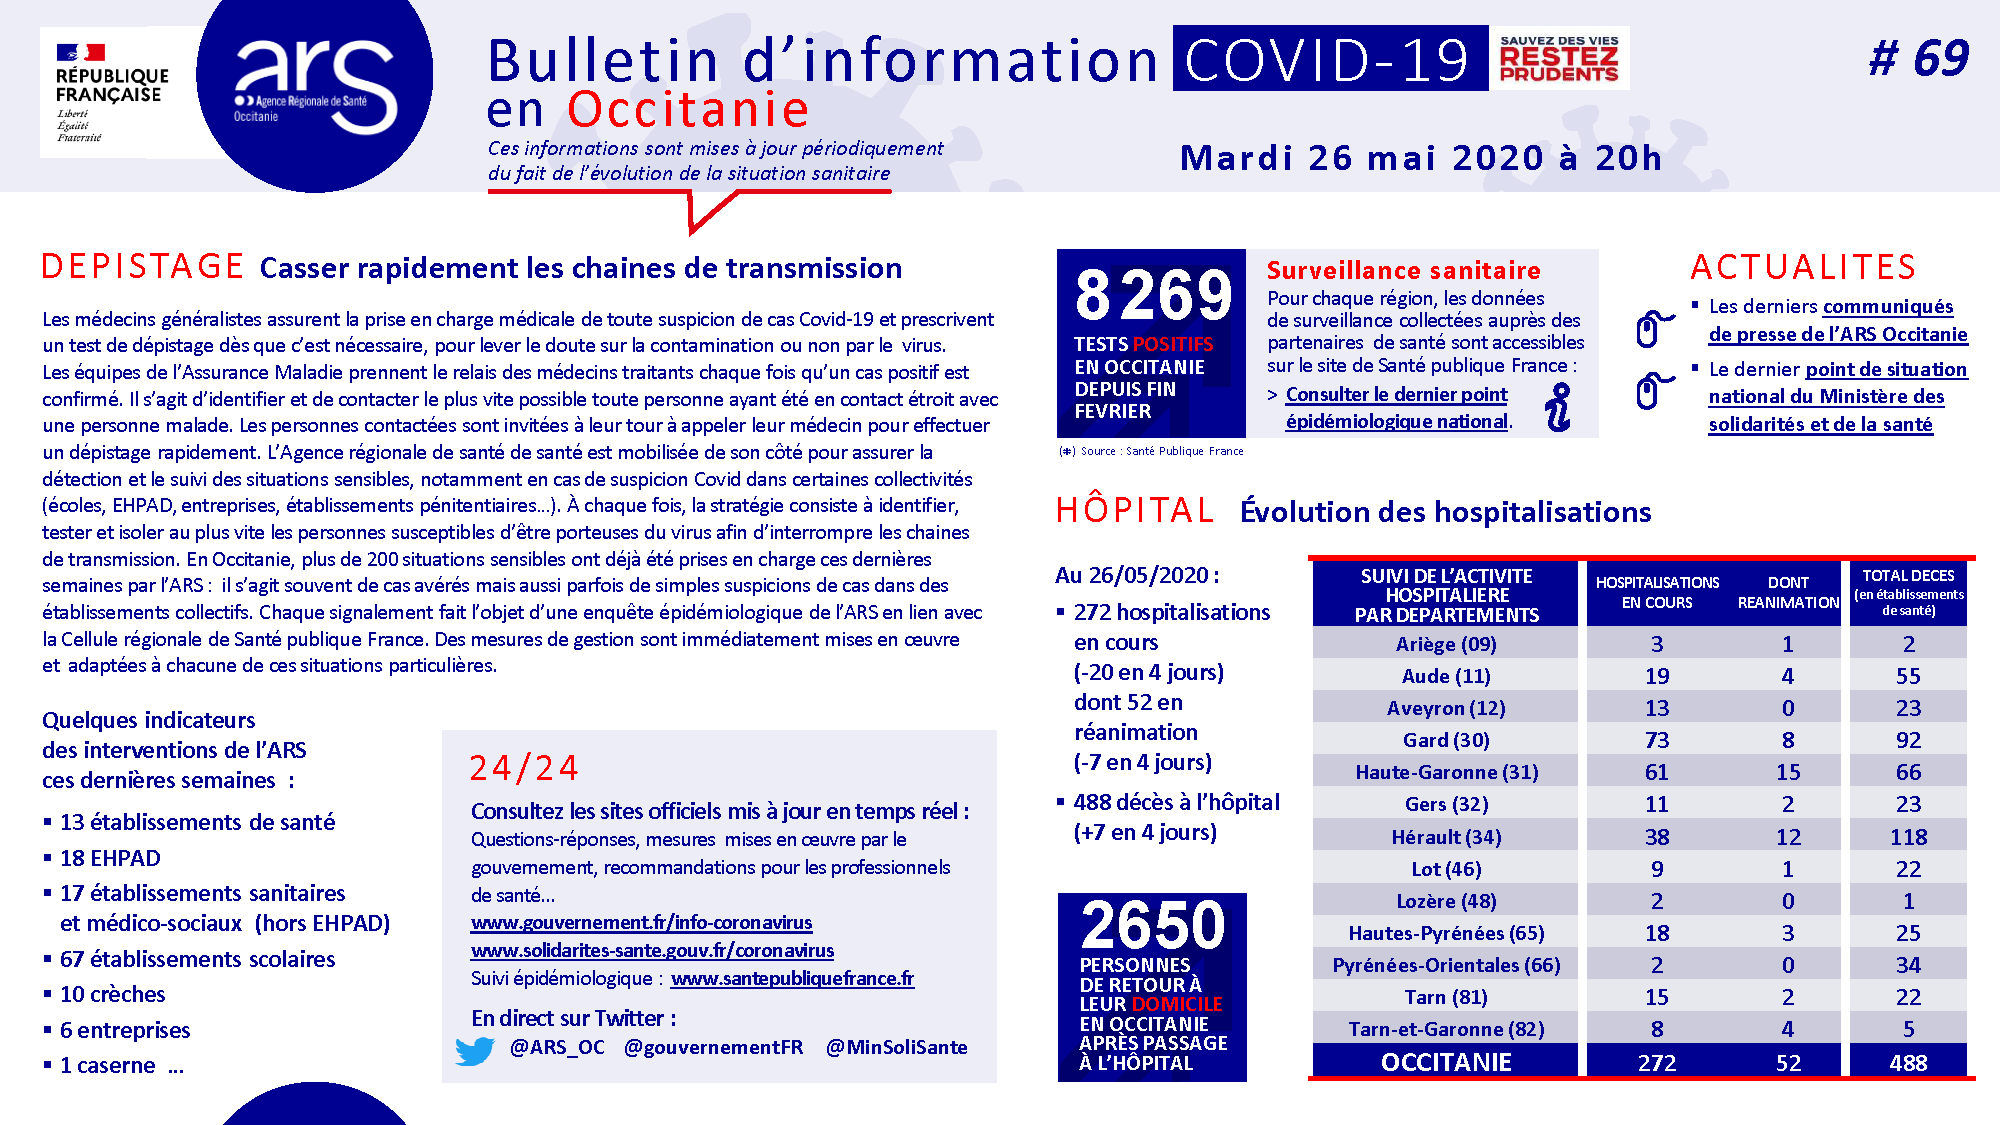 #COVID19. Bulletin d'information en Occitatanie #69 26/05/2020